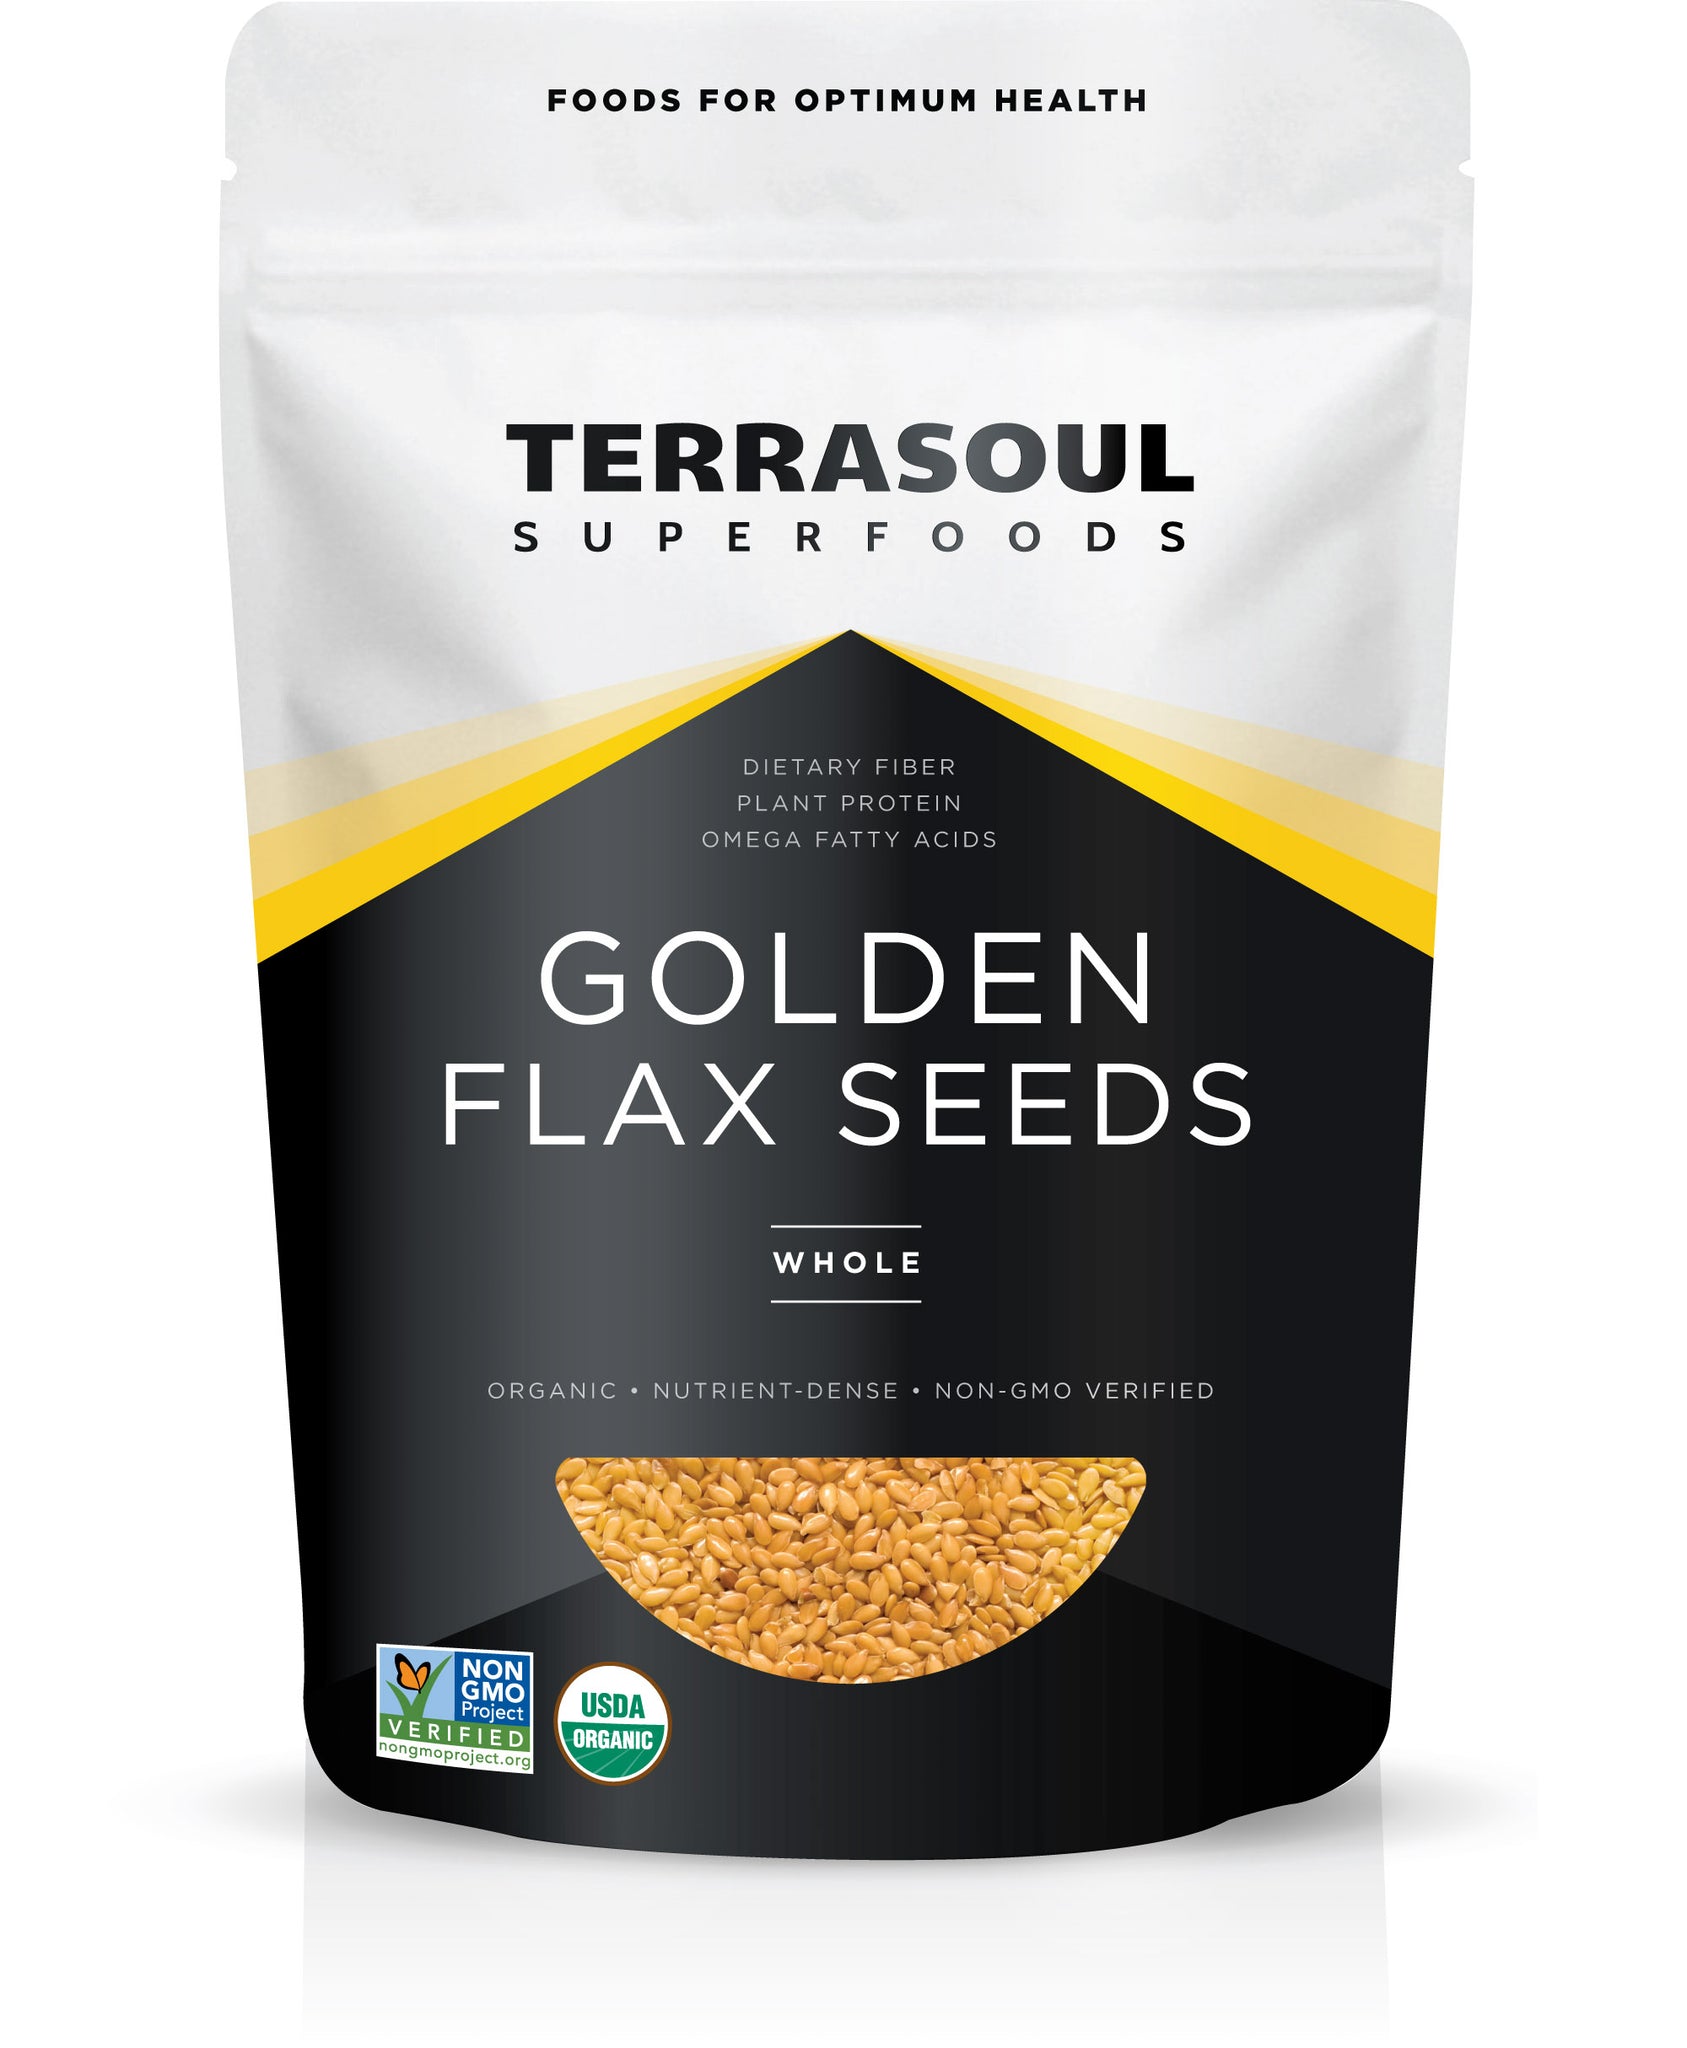 organic golden flax seeds from stober farm